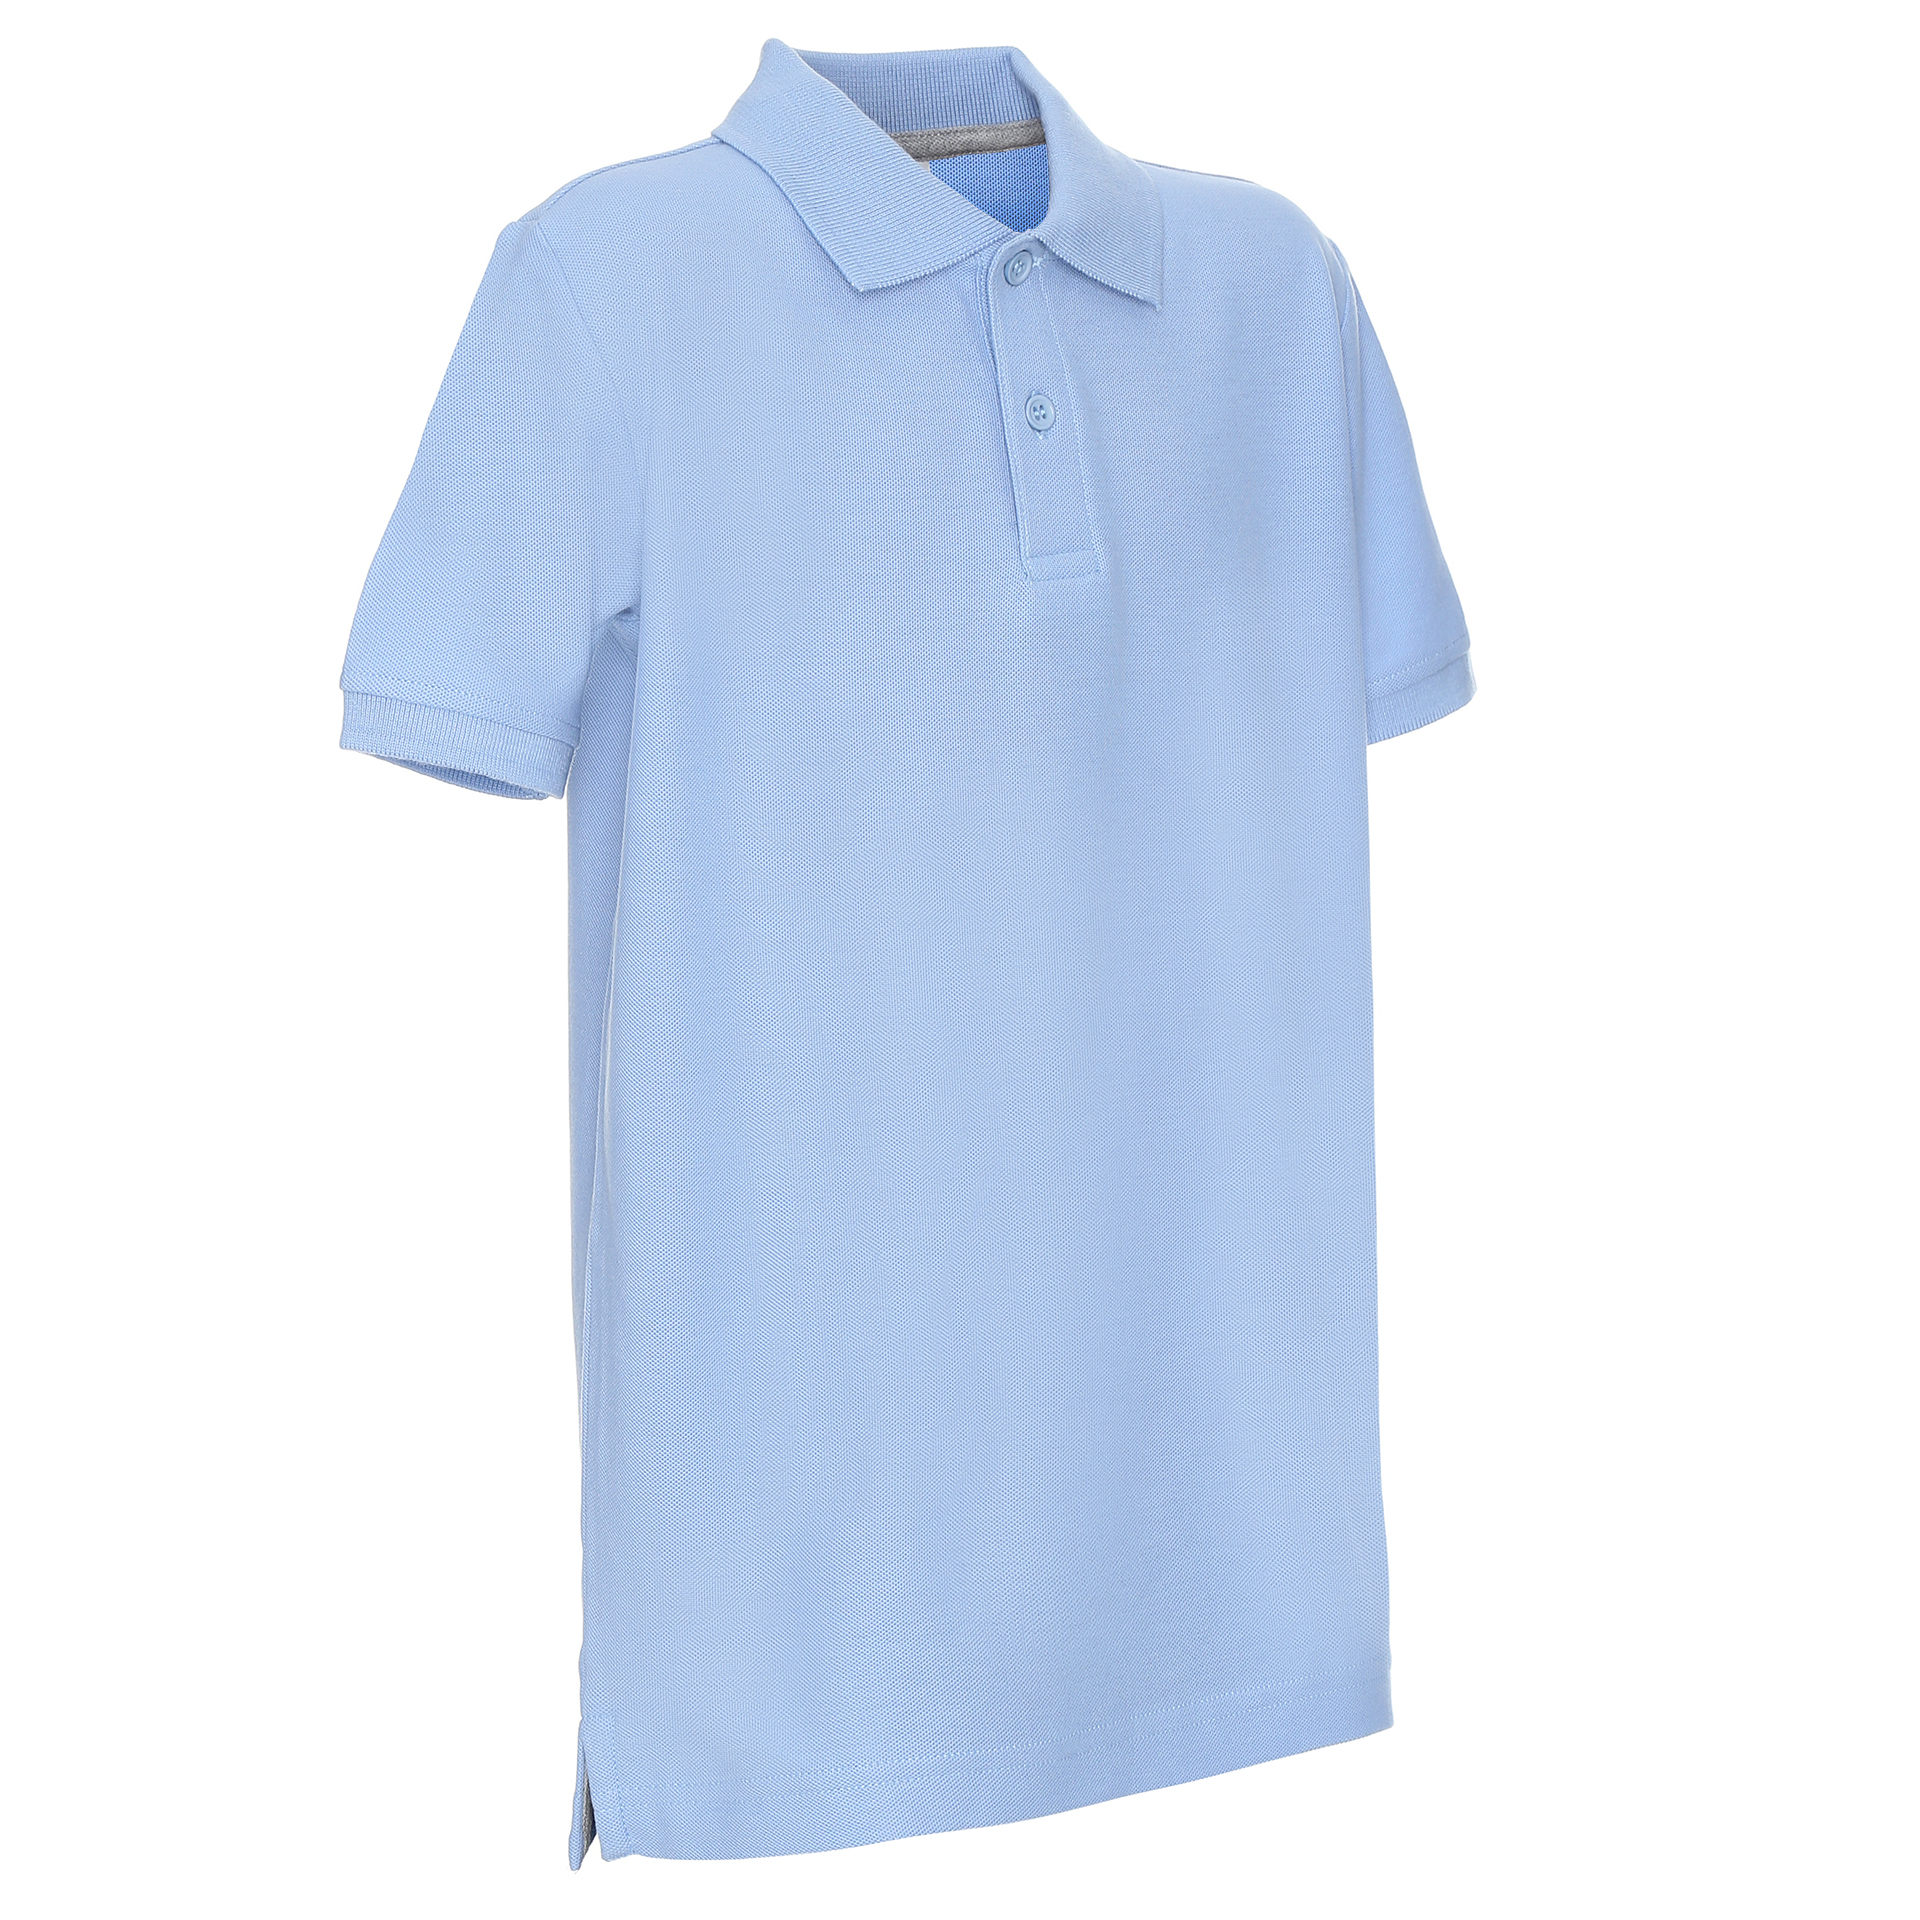 Koszulka dziecięca Promostars Polo Kid - błękitny